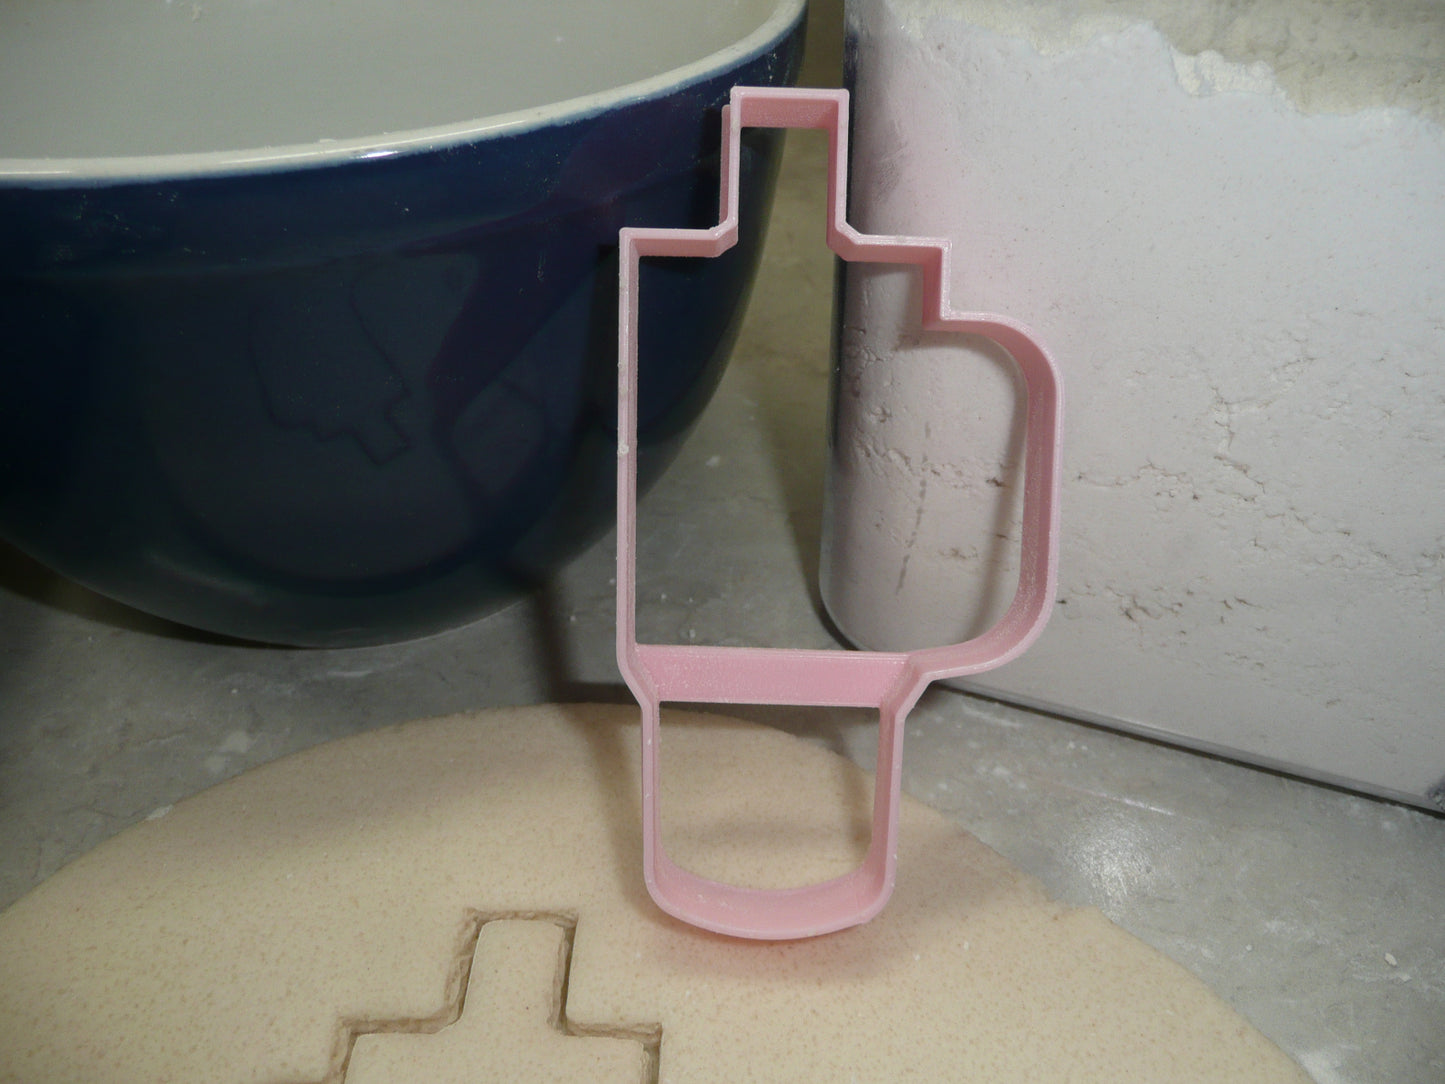 Tumbler Shape Travel Cup Mug Cookie Cutter Made In USA PR5155